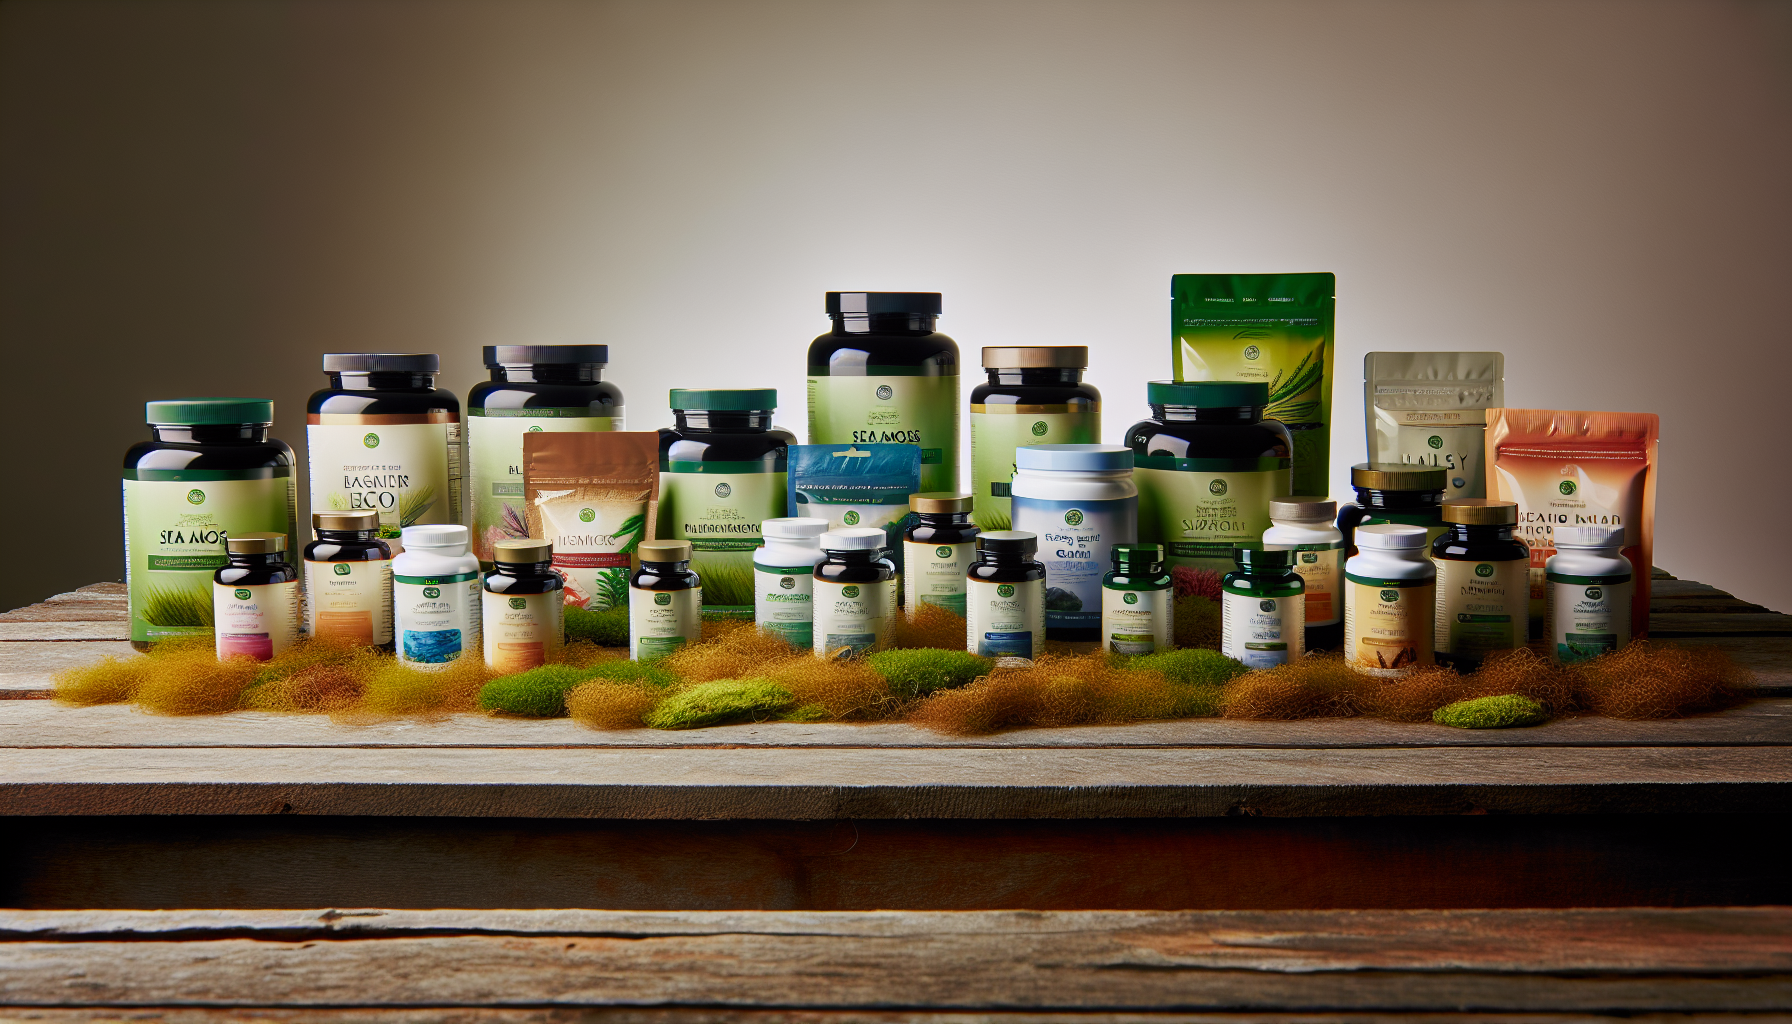 Various sea moss supplements